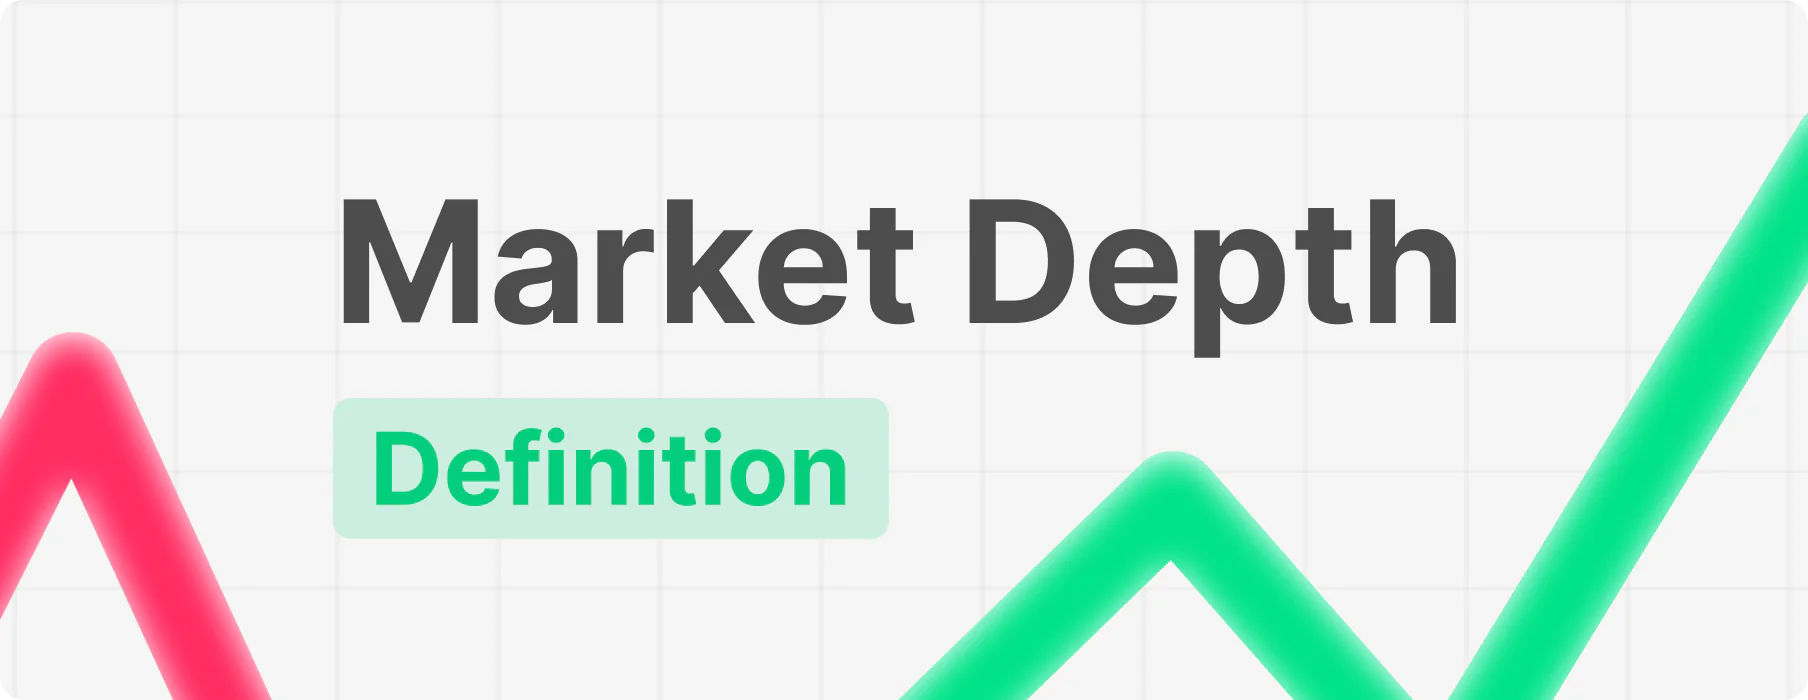 Market Depth Definition